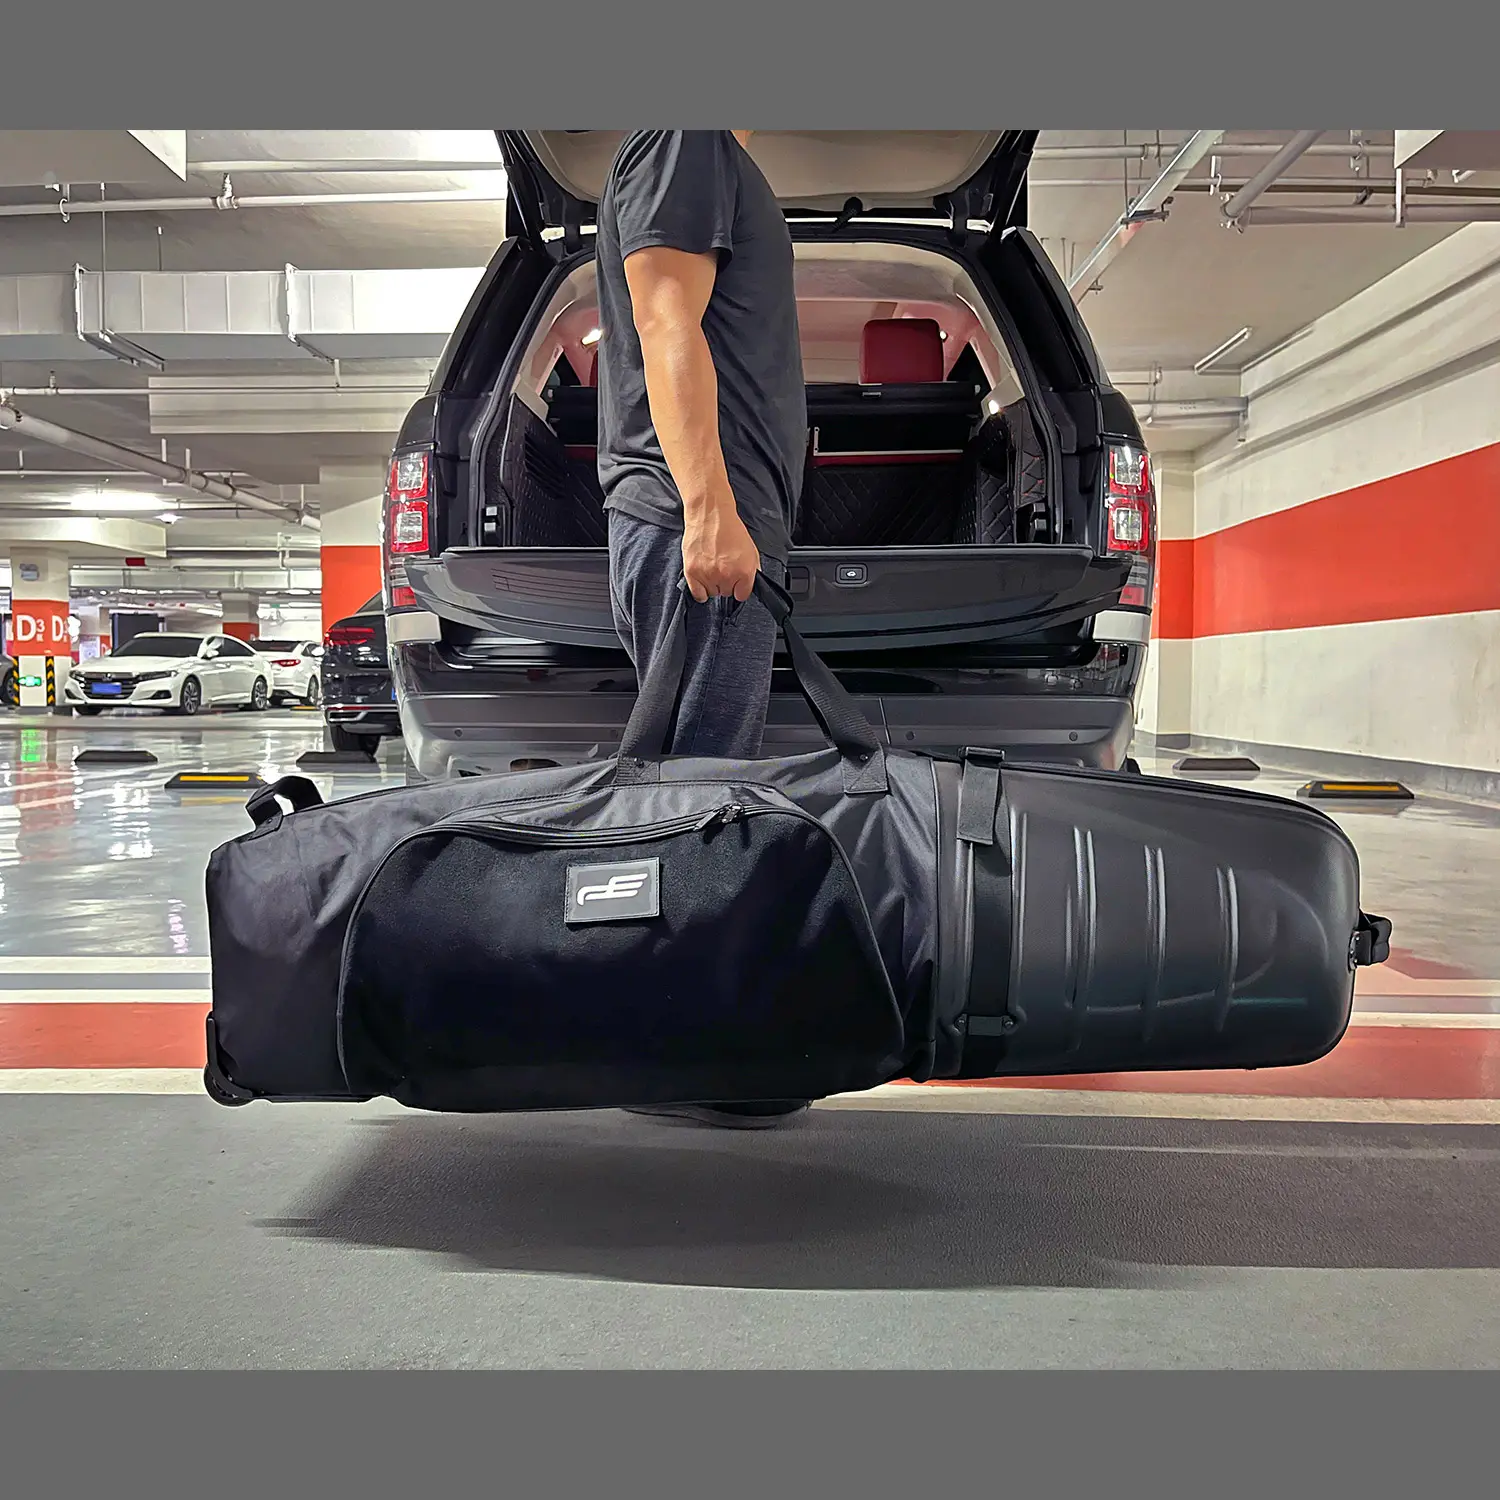 Playeagle tas Golf Hard Case Top Travel tas Golf udara dengan roda tas Golf cangkang keras klub melindungi